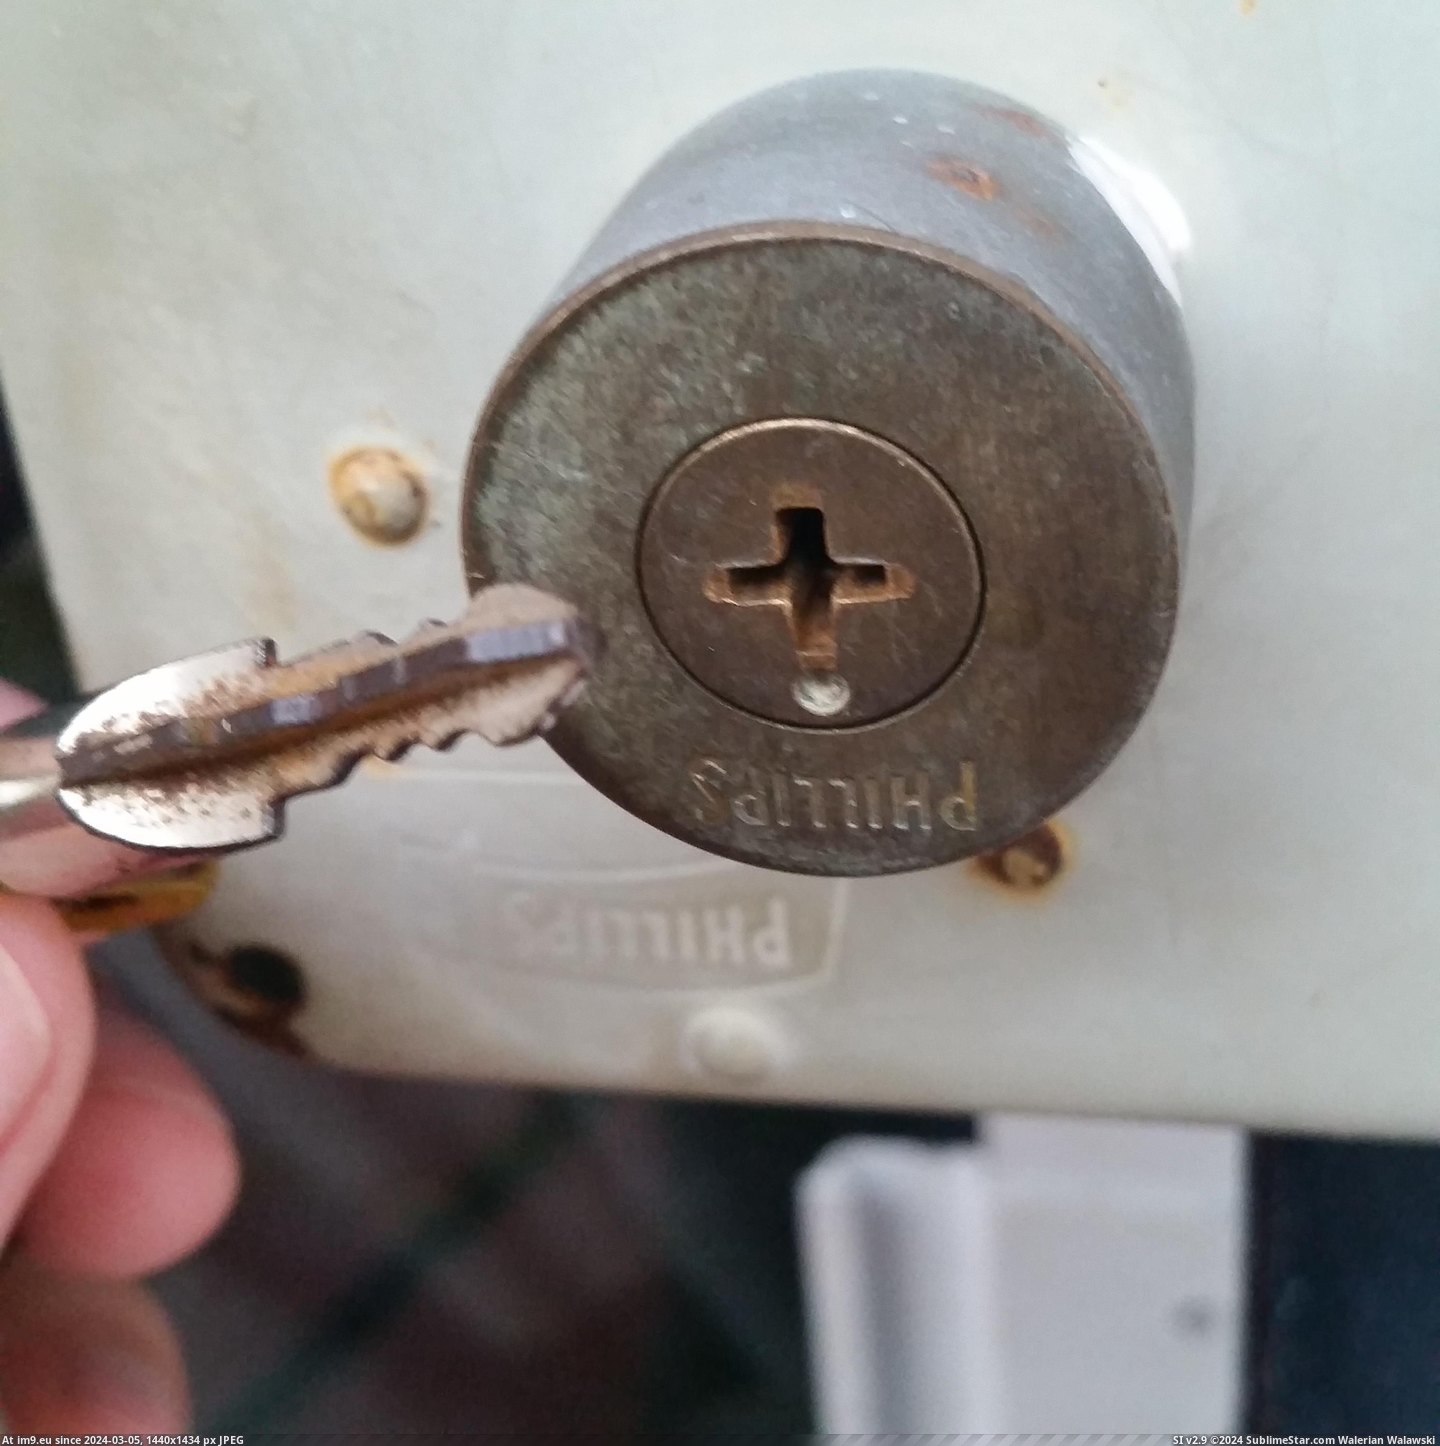 [Mildlyinteresting] This key looks like a screwdriver (in My r/MILDLYINTERESTING favs)